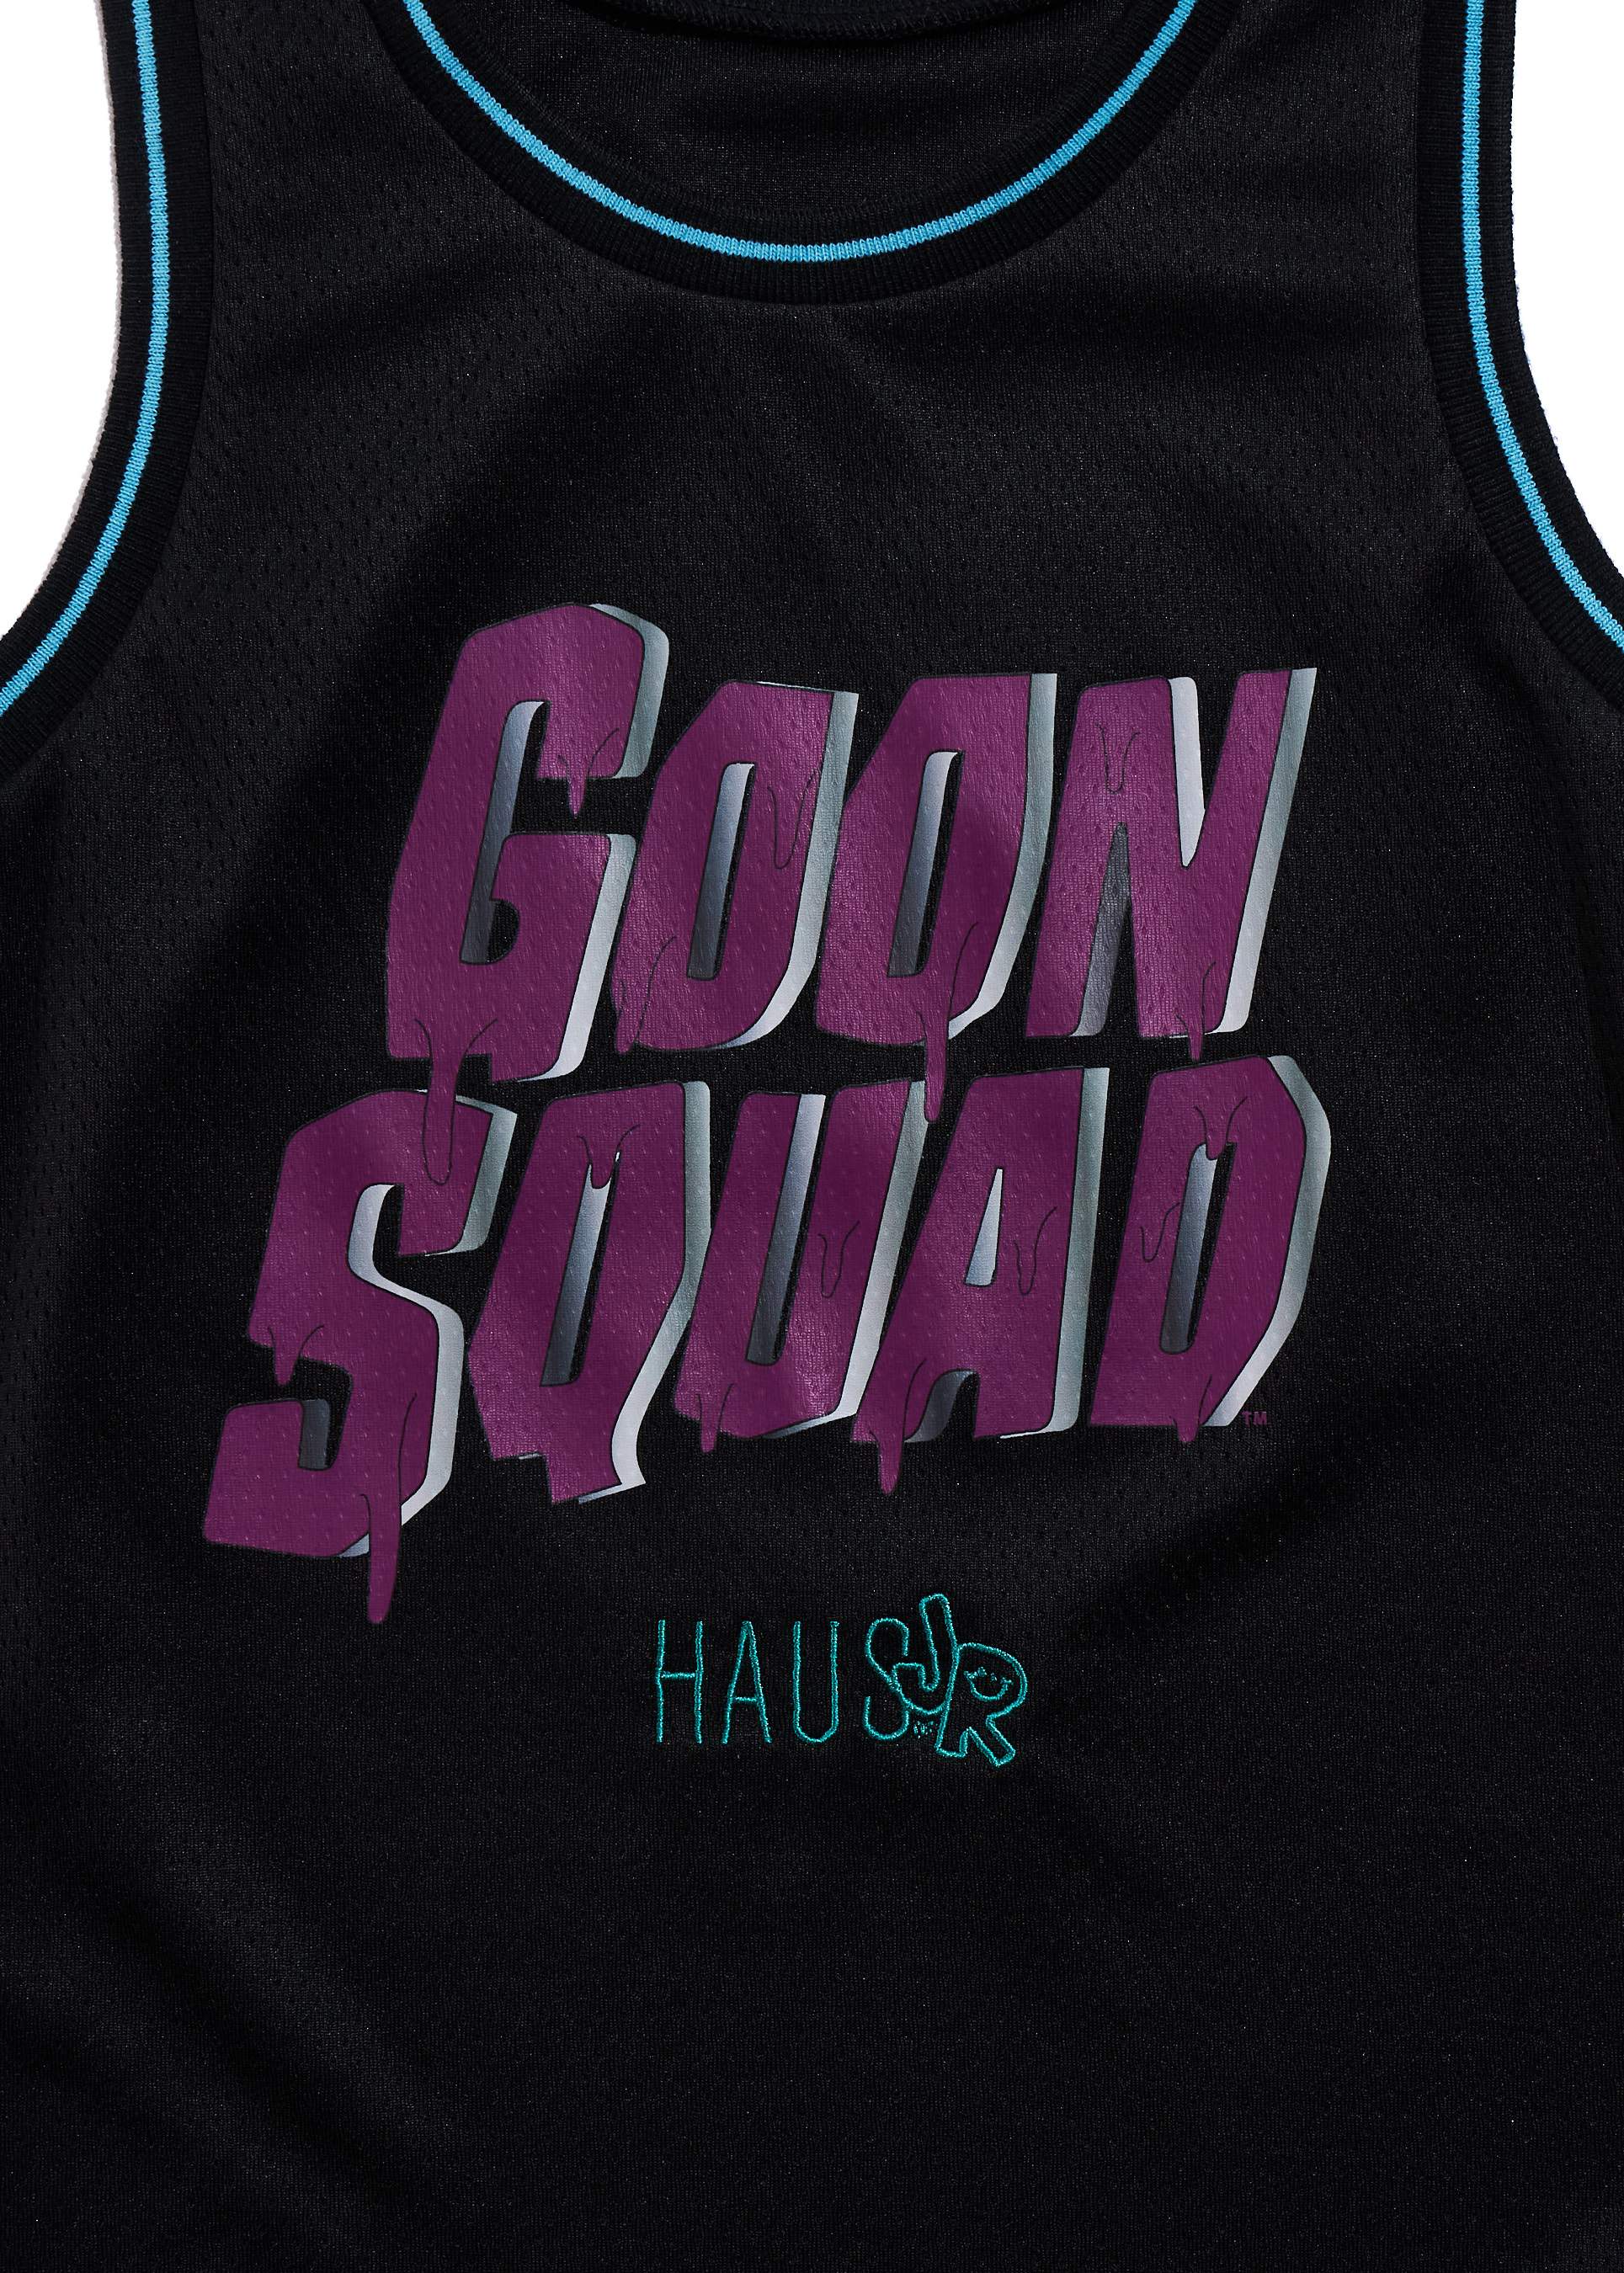 Space Jam Goon Squad Jersey